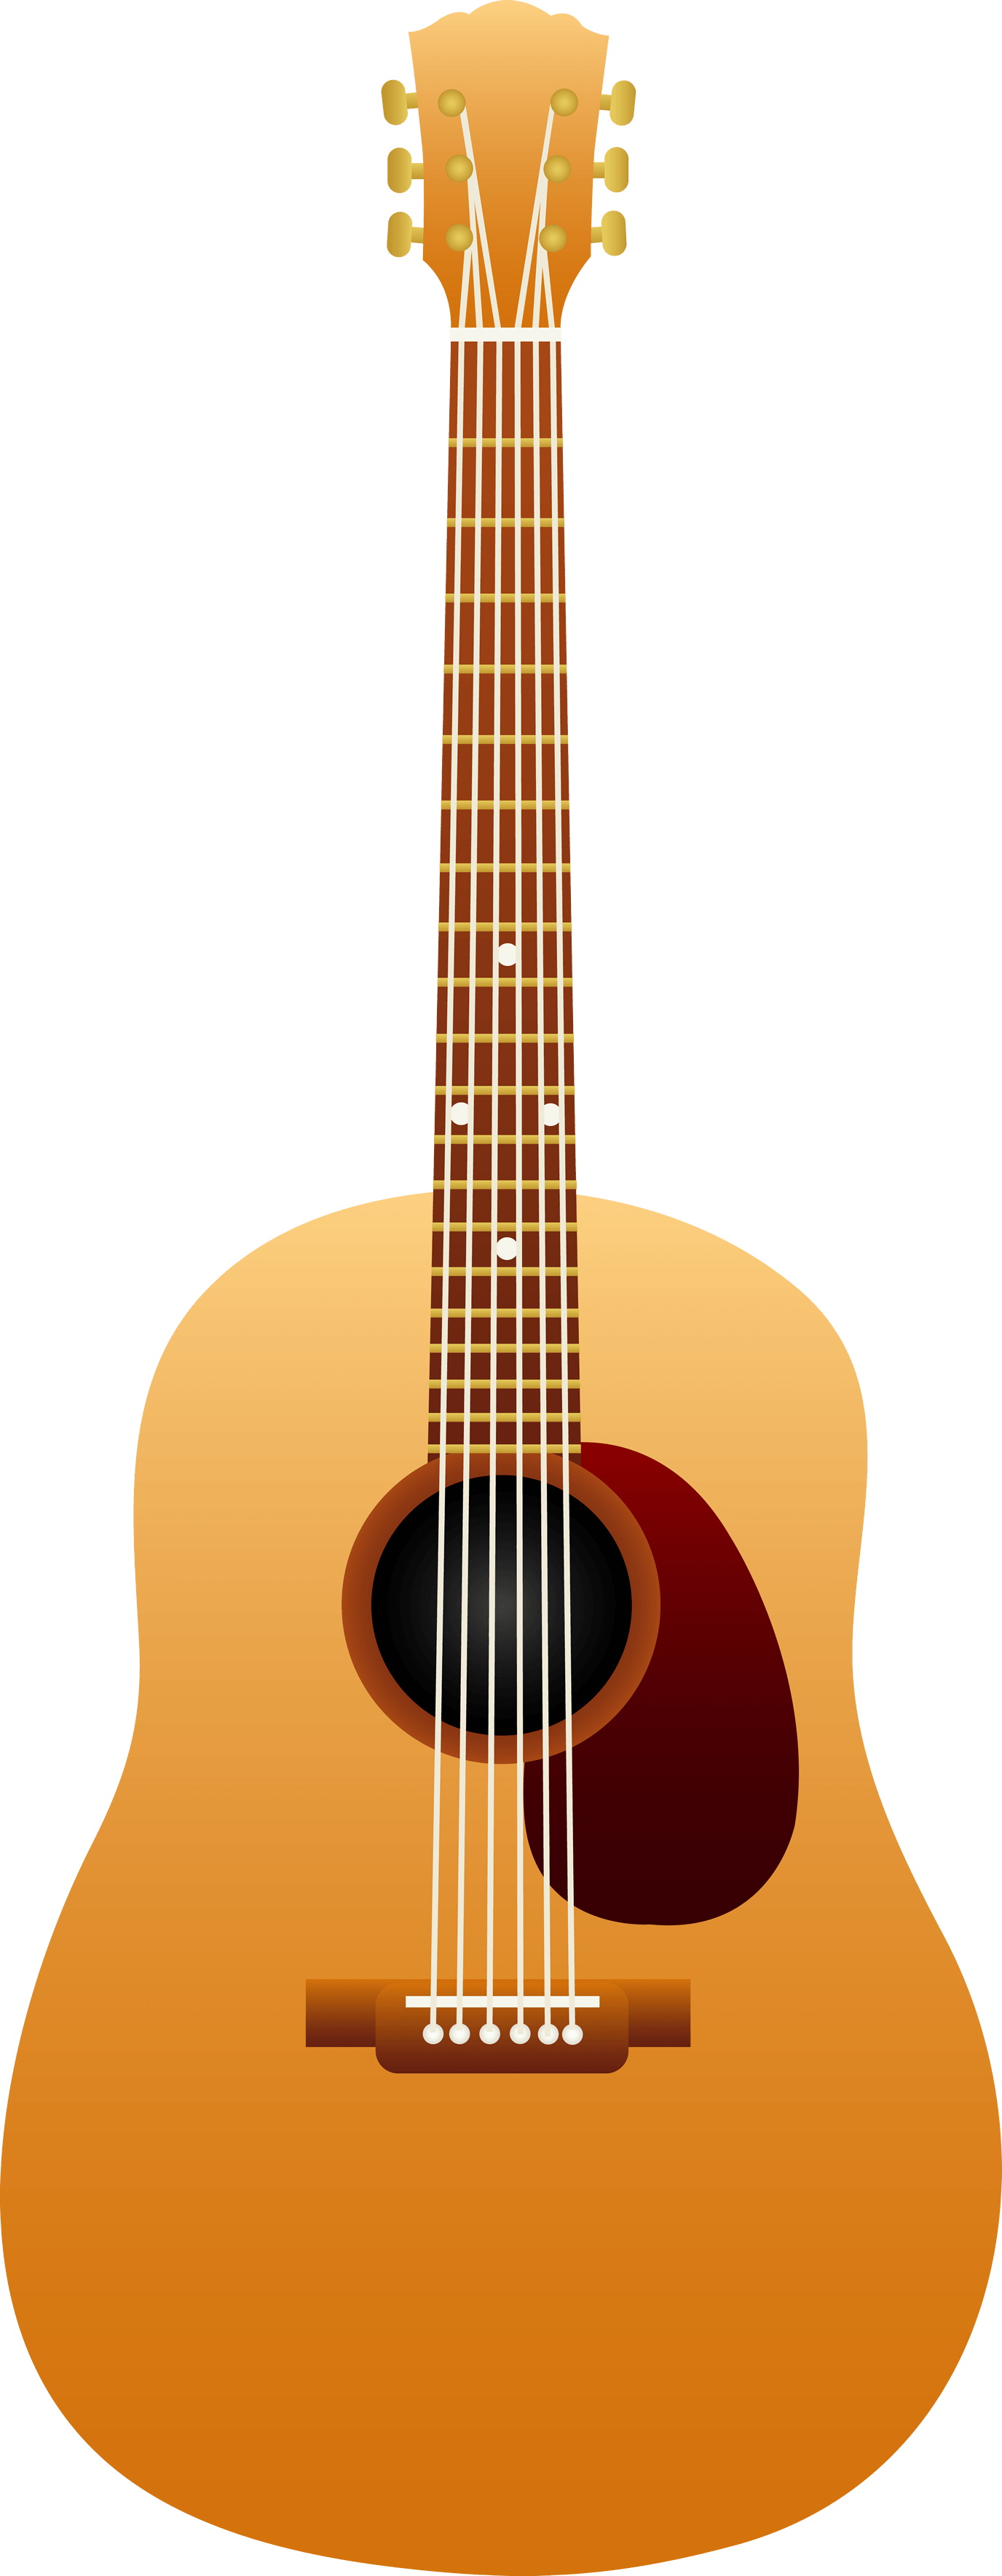 Guitar Png Image PNG Image